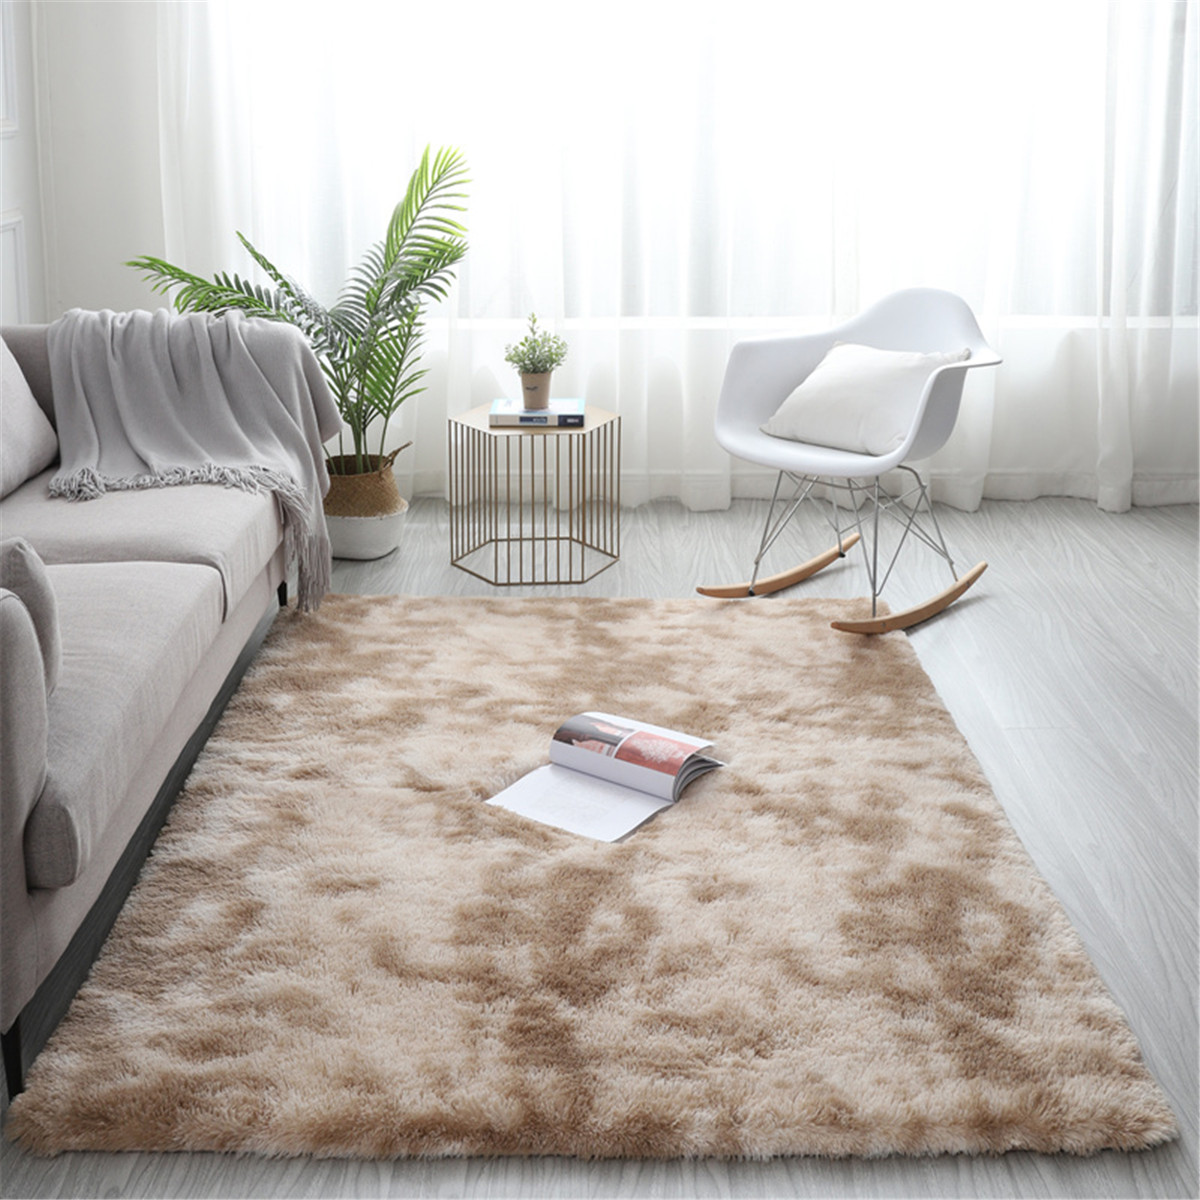 150X240CM-Tie-dyed-Gradient-Carpet-Long-Haired-Anti-slip-Carpet-For-Bedroom-Living-Room-Study-Room-1919744-7